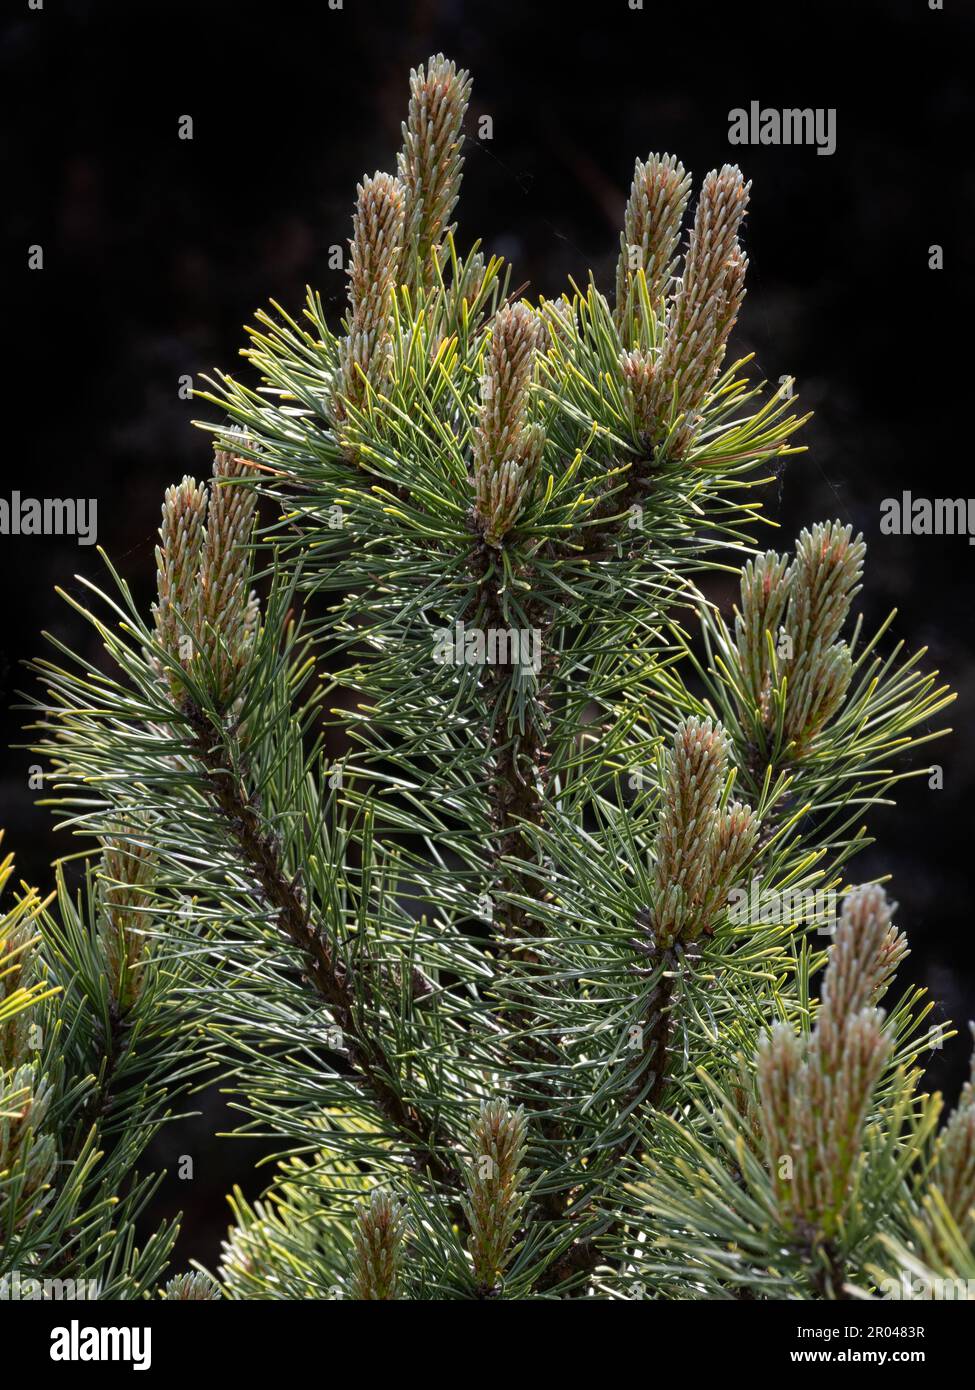 Closeup of Pinus mugo 'Ophir' in a garden against a dark background Stock Photo